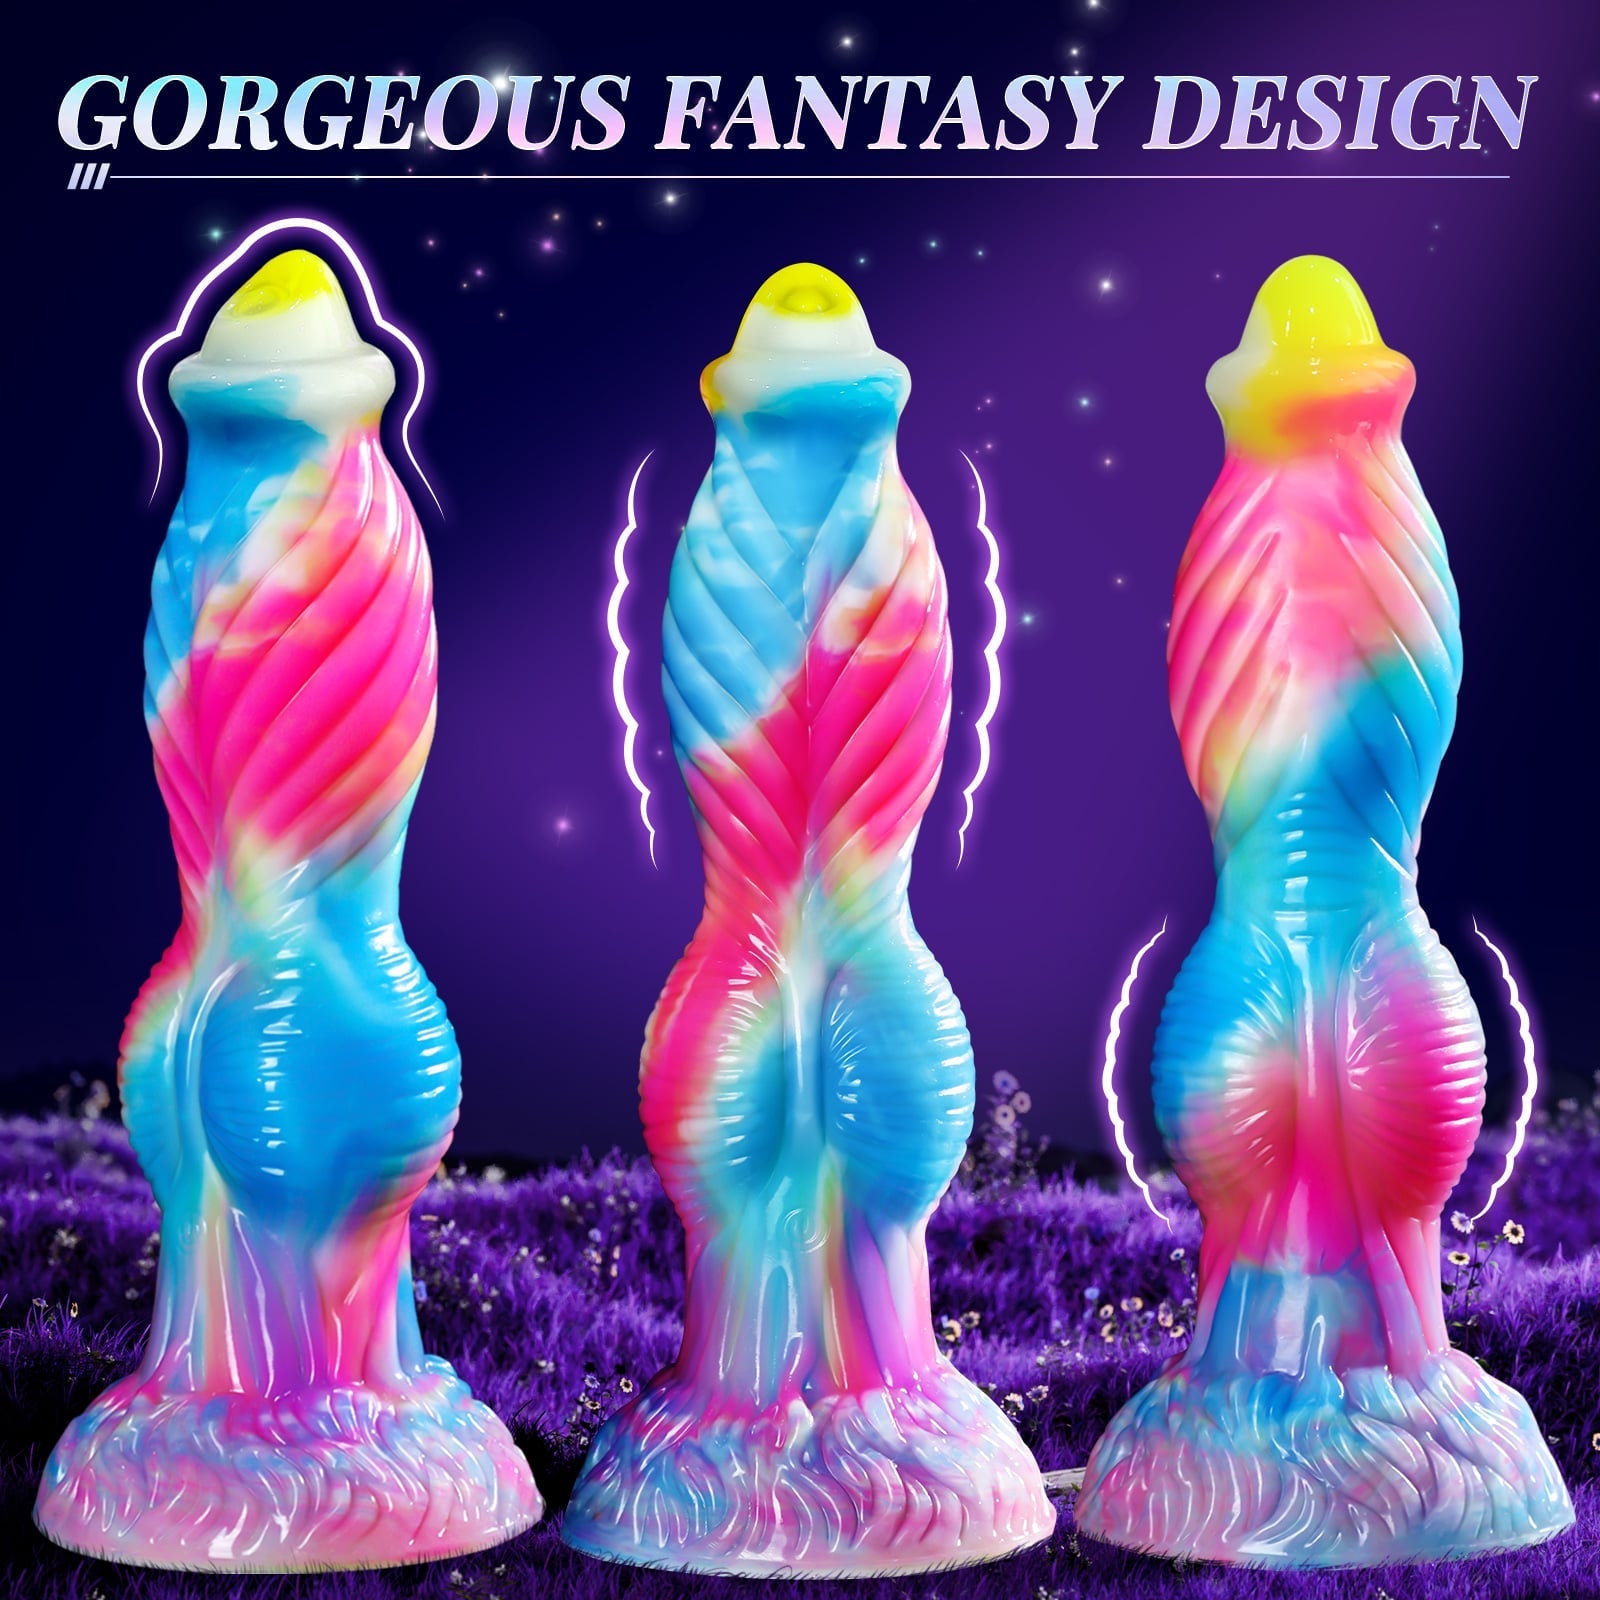 10.2 inch Fantastic 3 in 1 Realistic Huge dildo Vibrator Sex Toy